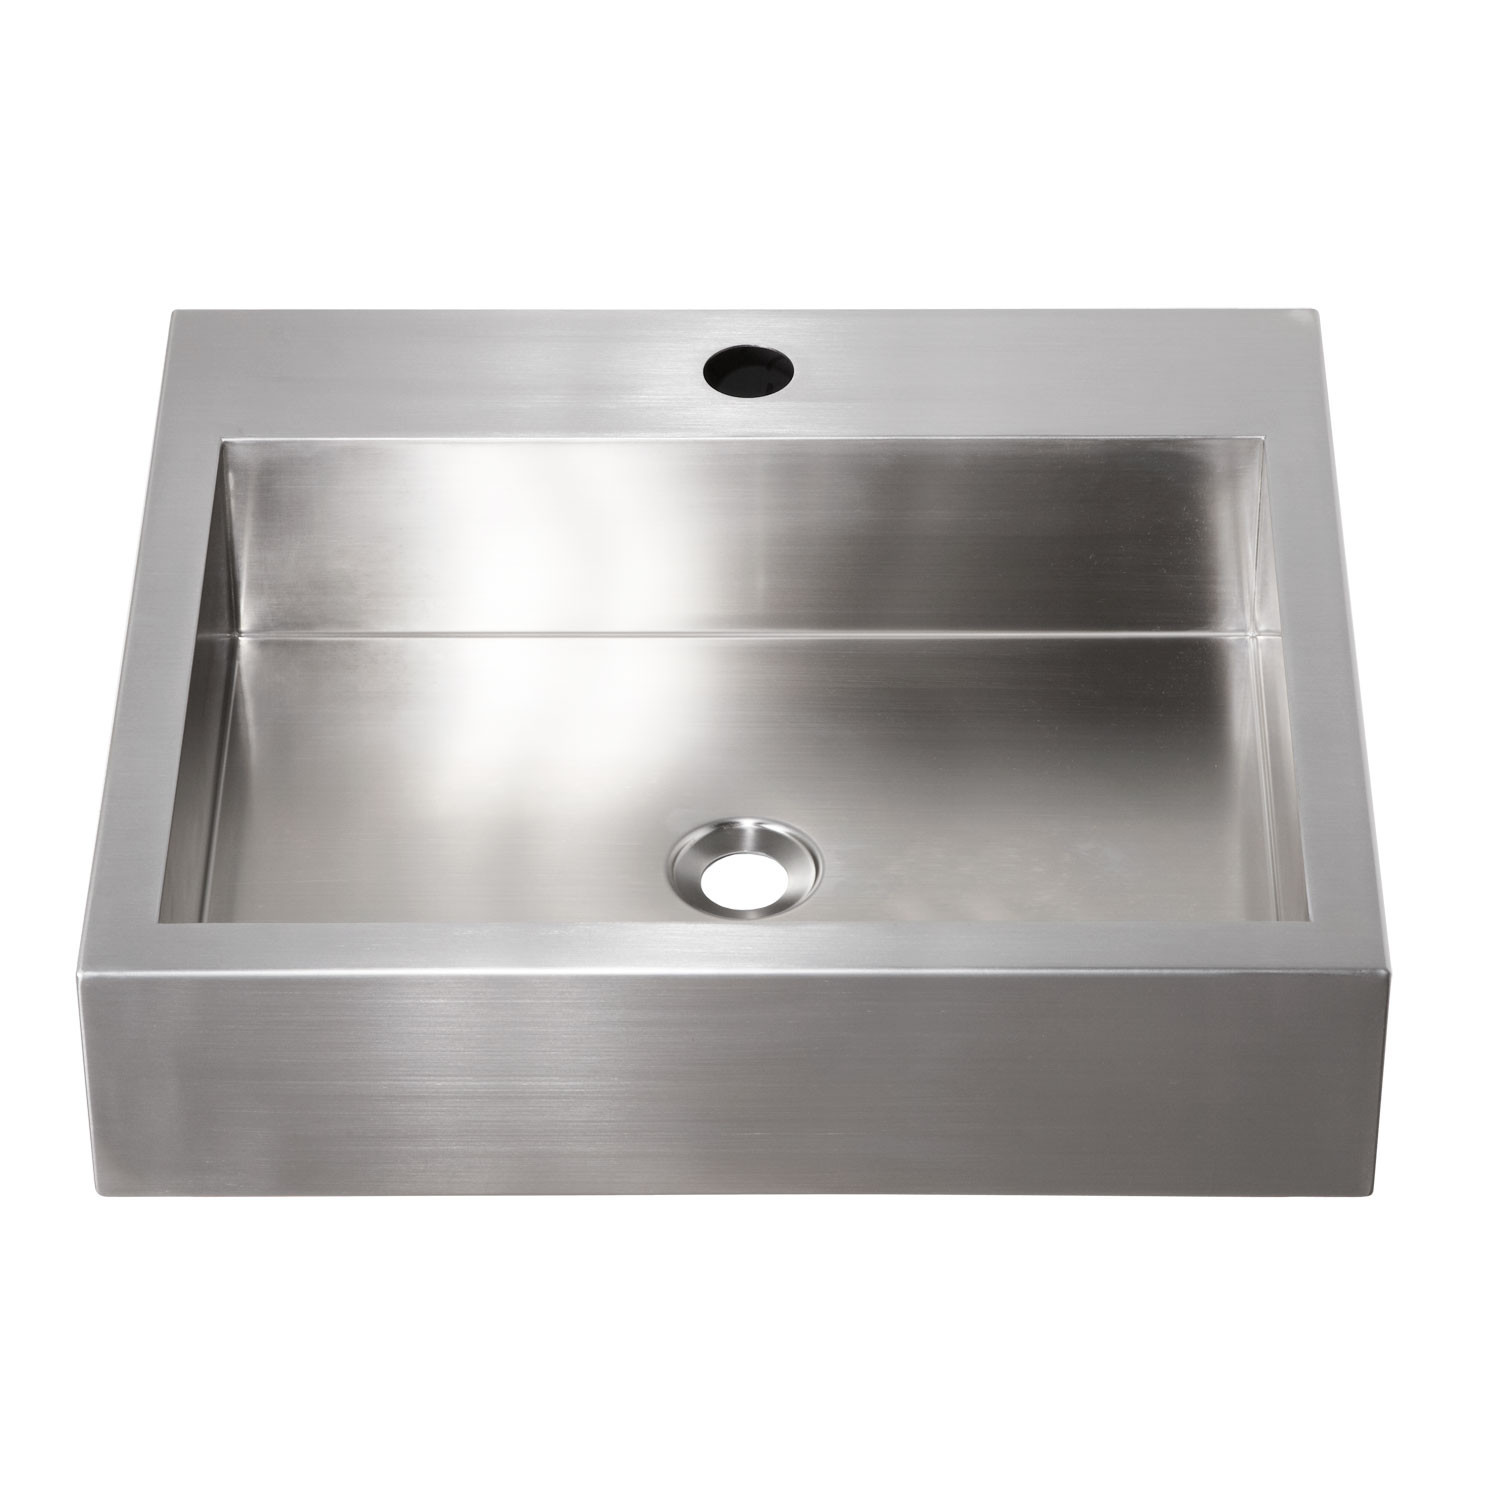 Stainless Steel Bathroom Sinks
 20" Clarendon Stainless Steel Square Vessel Sink